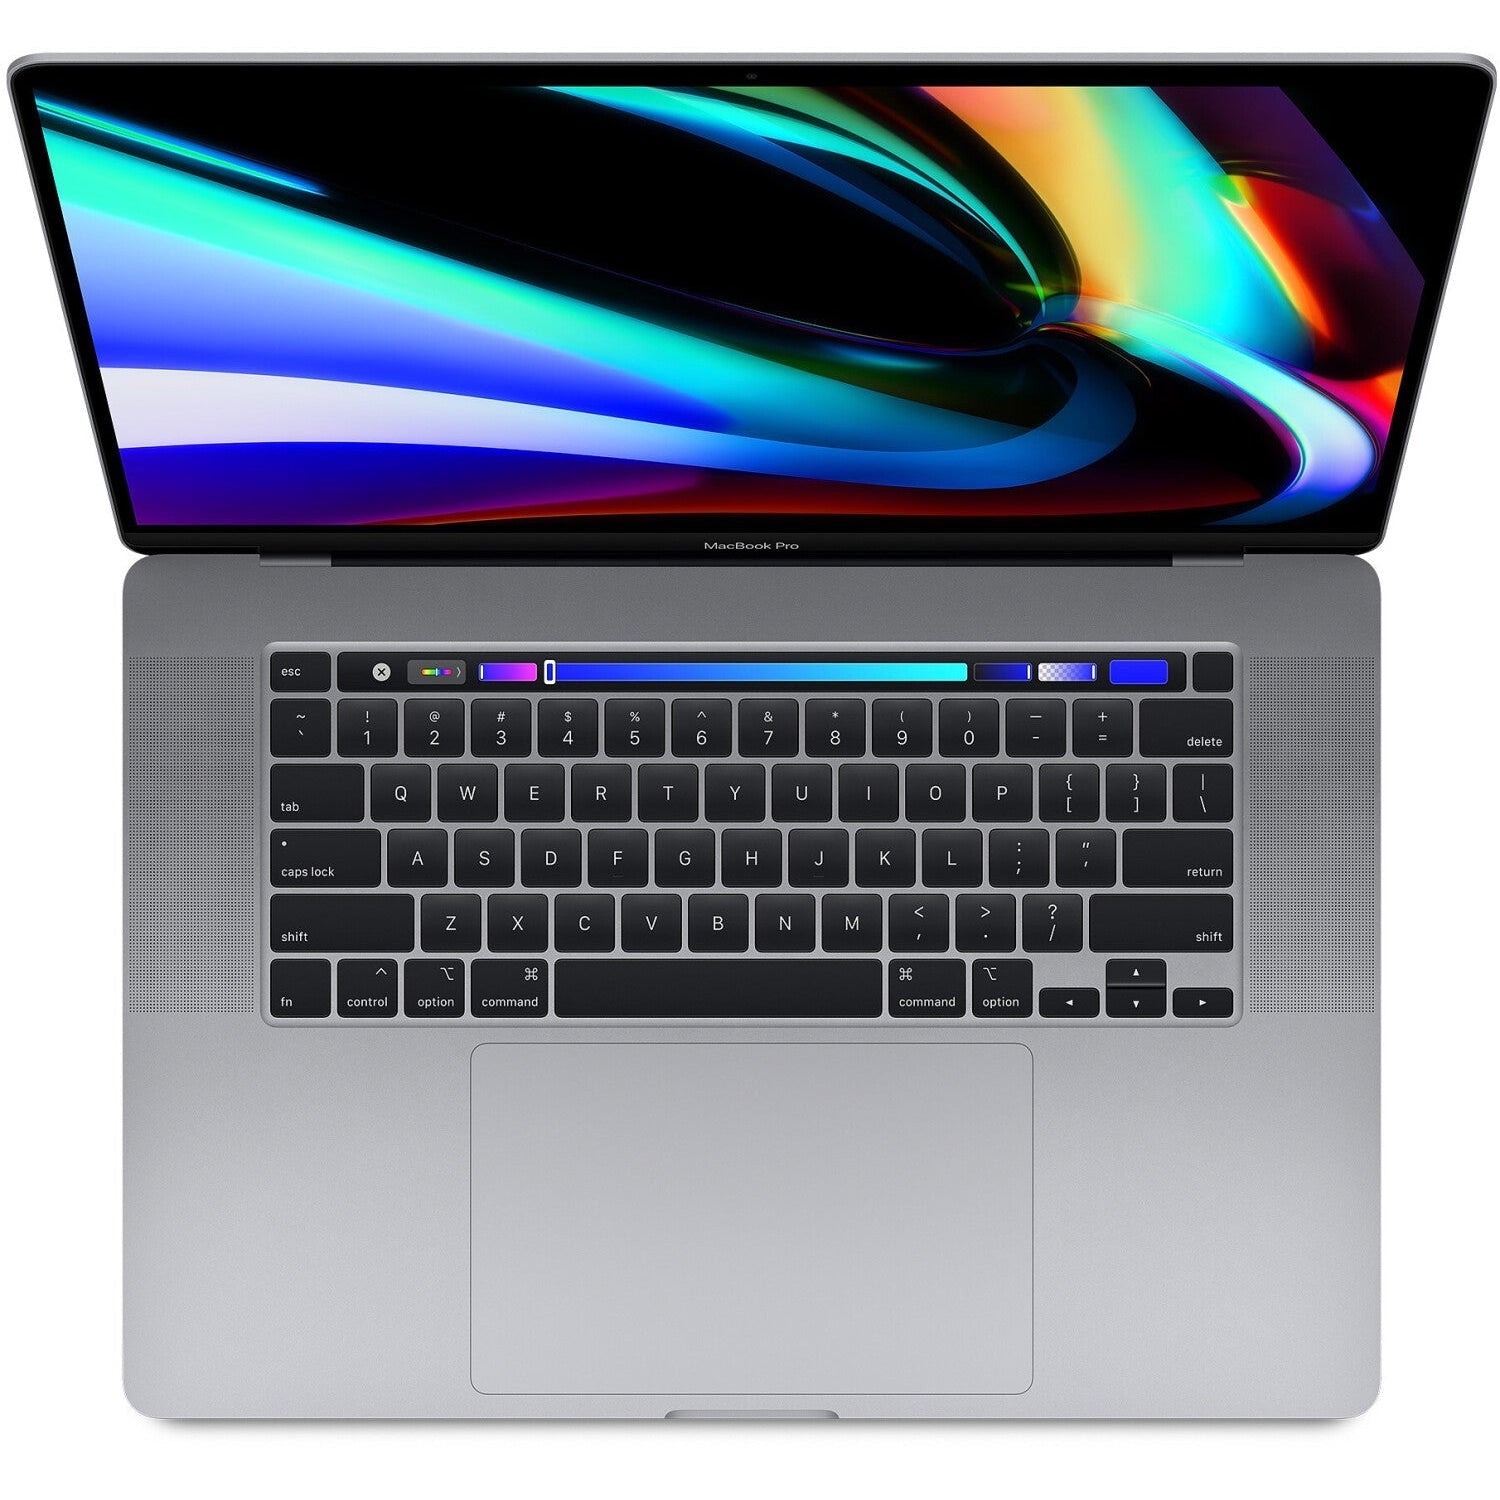 Apple MacBook Pro 16" MVVJ2B/A (2019) Laptop, Intel Core i7, 16GB, 512GB, Space Grey - Refurbished Excellent